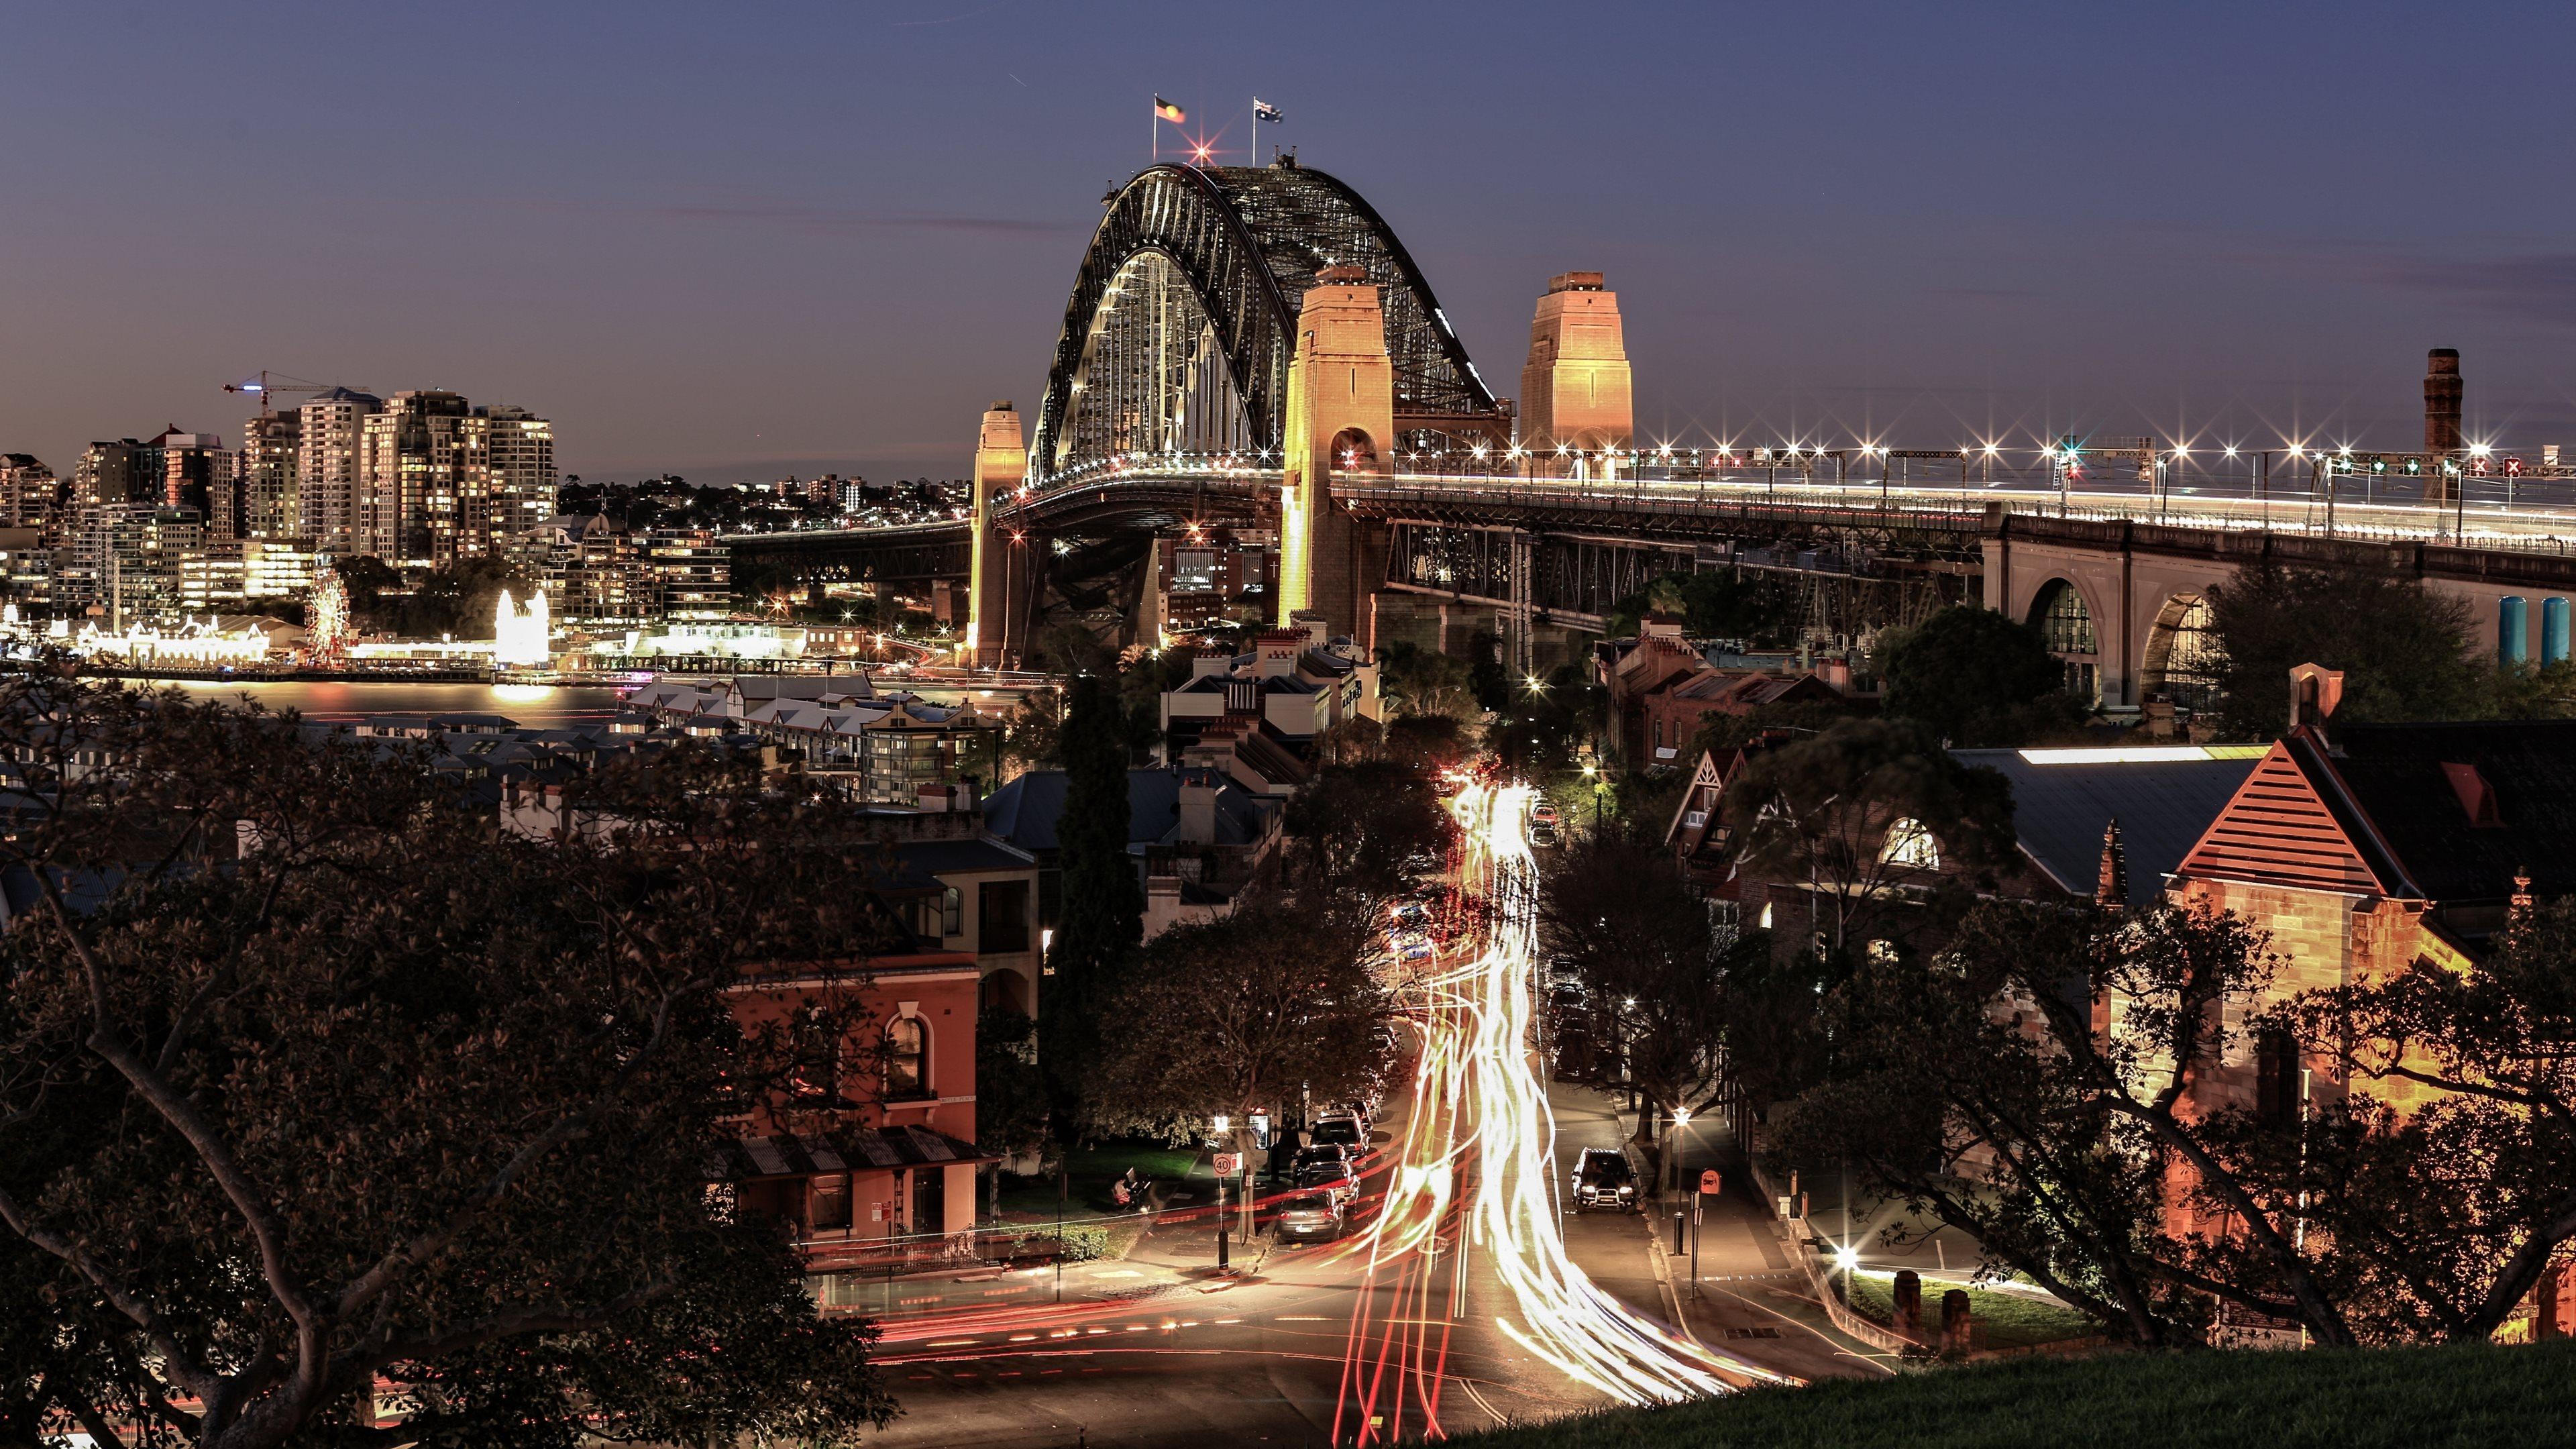 Bridge in Sydney HD desktop wallpaper, Widescreen, High Definition